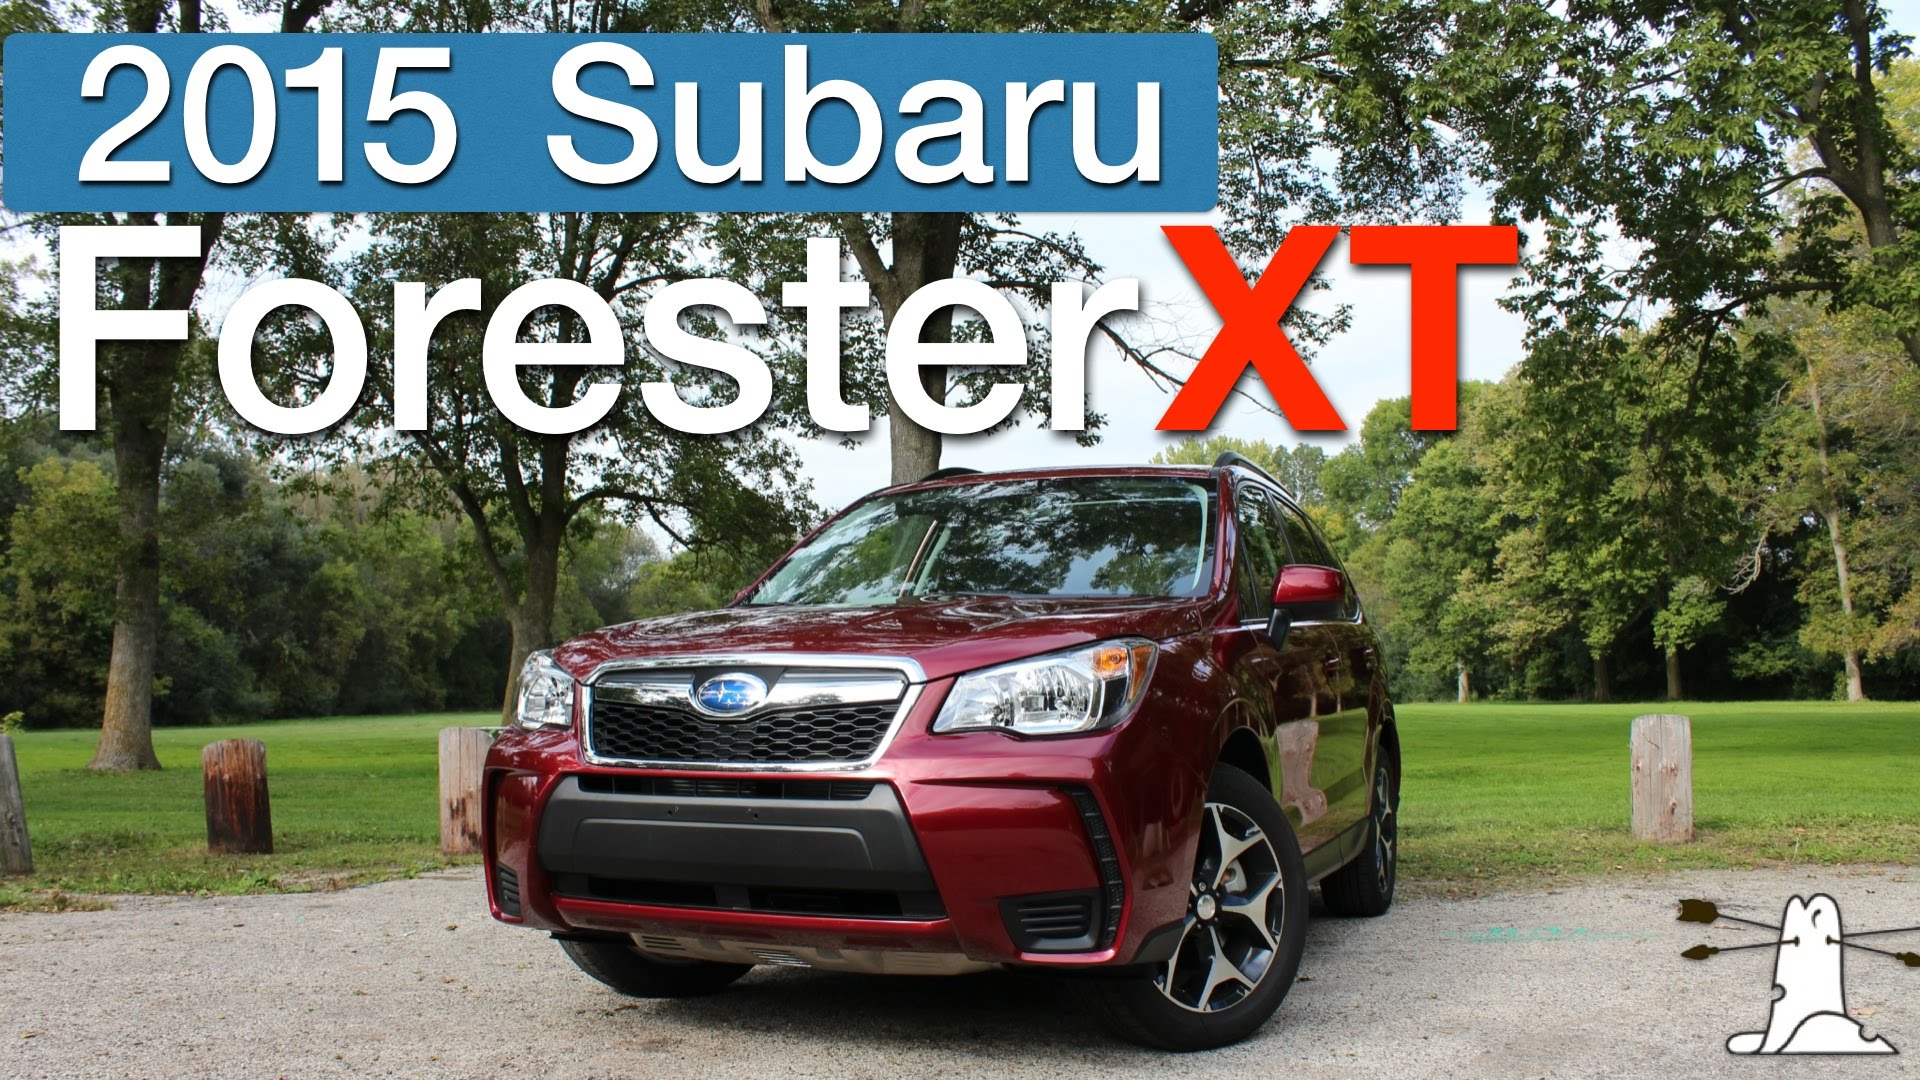 2015 Subaru Foresterxt Car Review Video